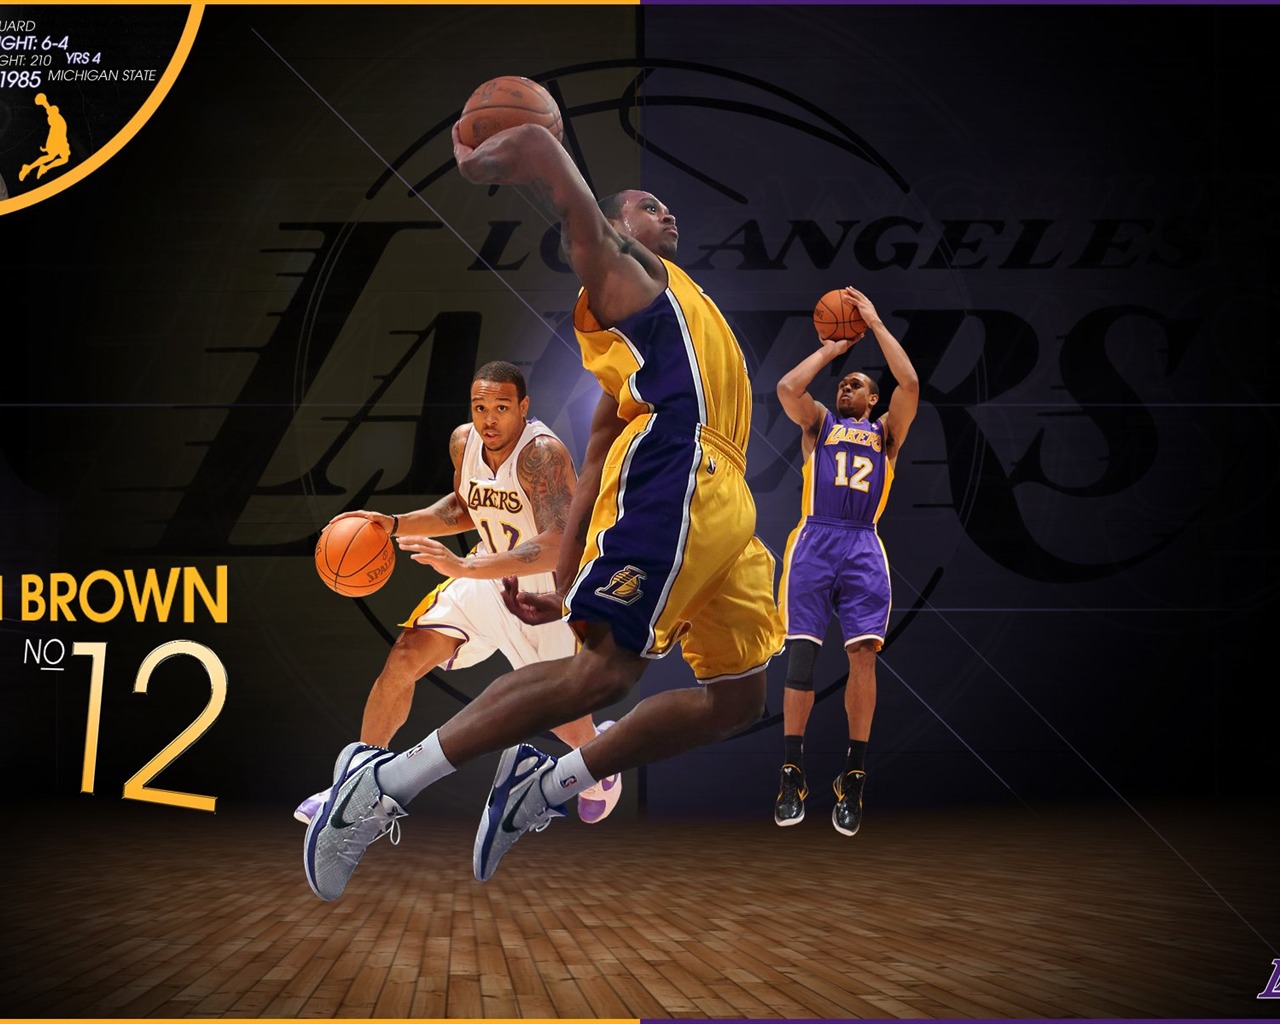 NBA 2010-11 season, the Los Angeles Lakers Wallpapers #12 - 1280x1024